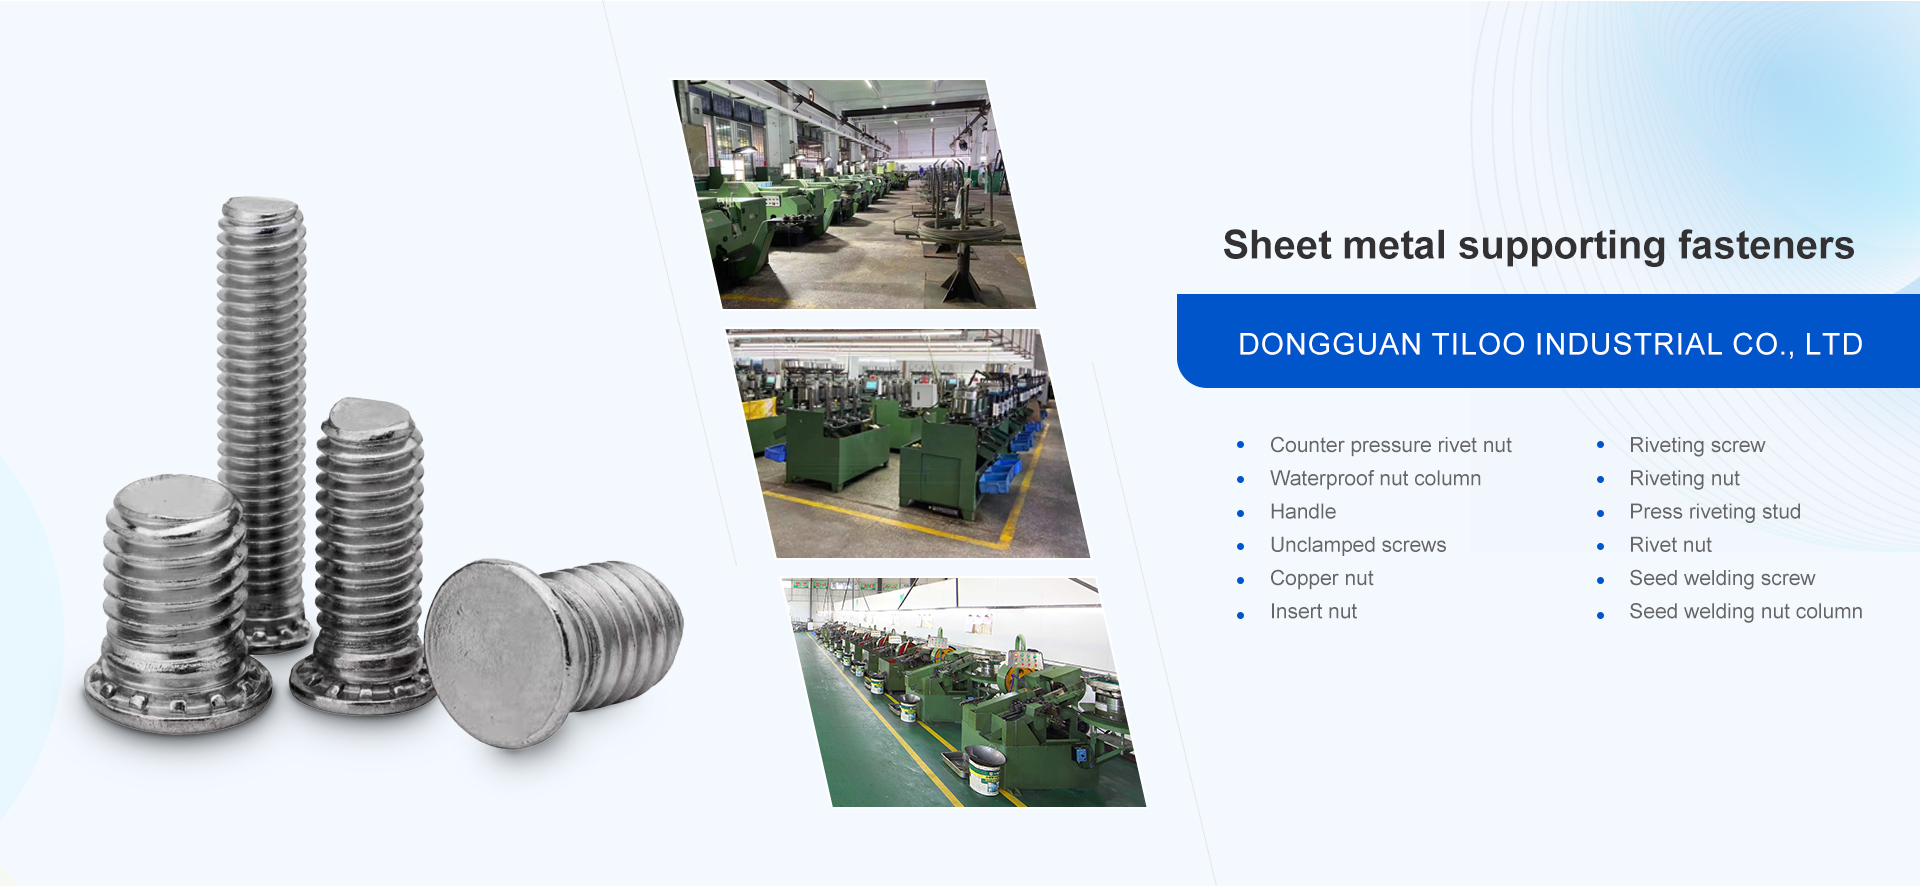 Dongguan Tiloo Industrial Co., Ltd